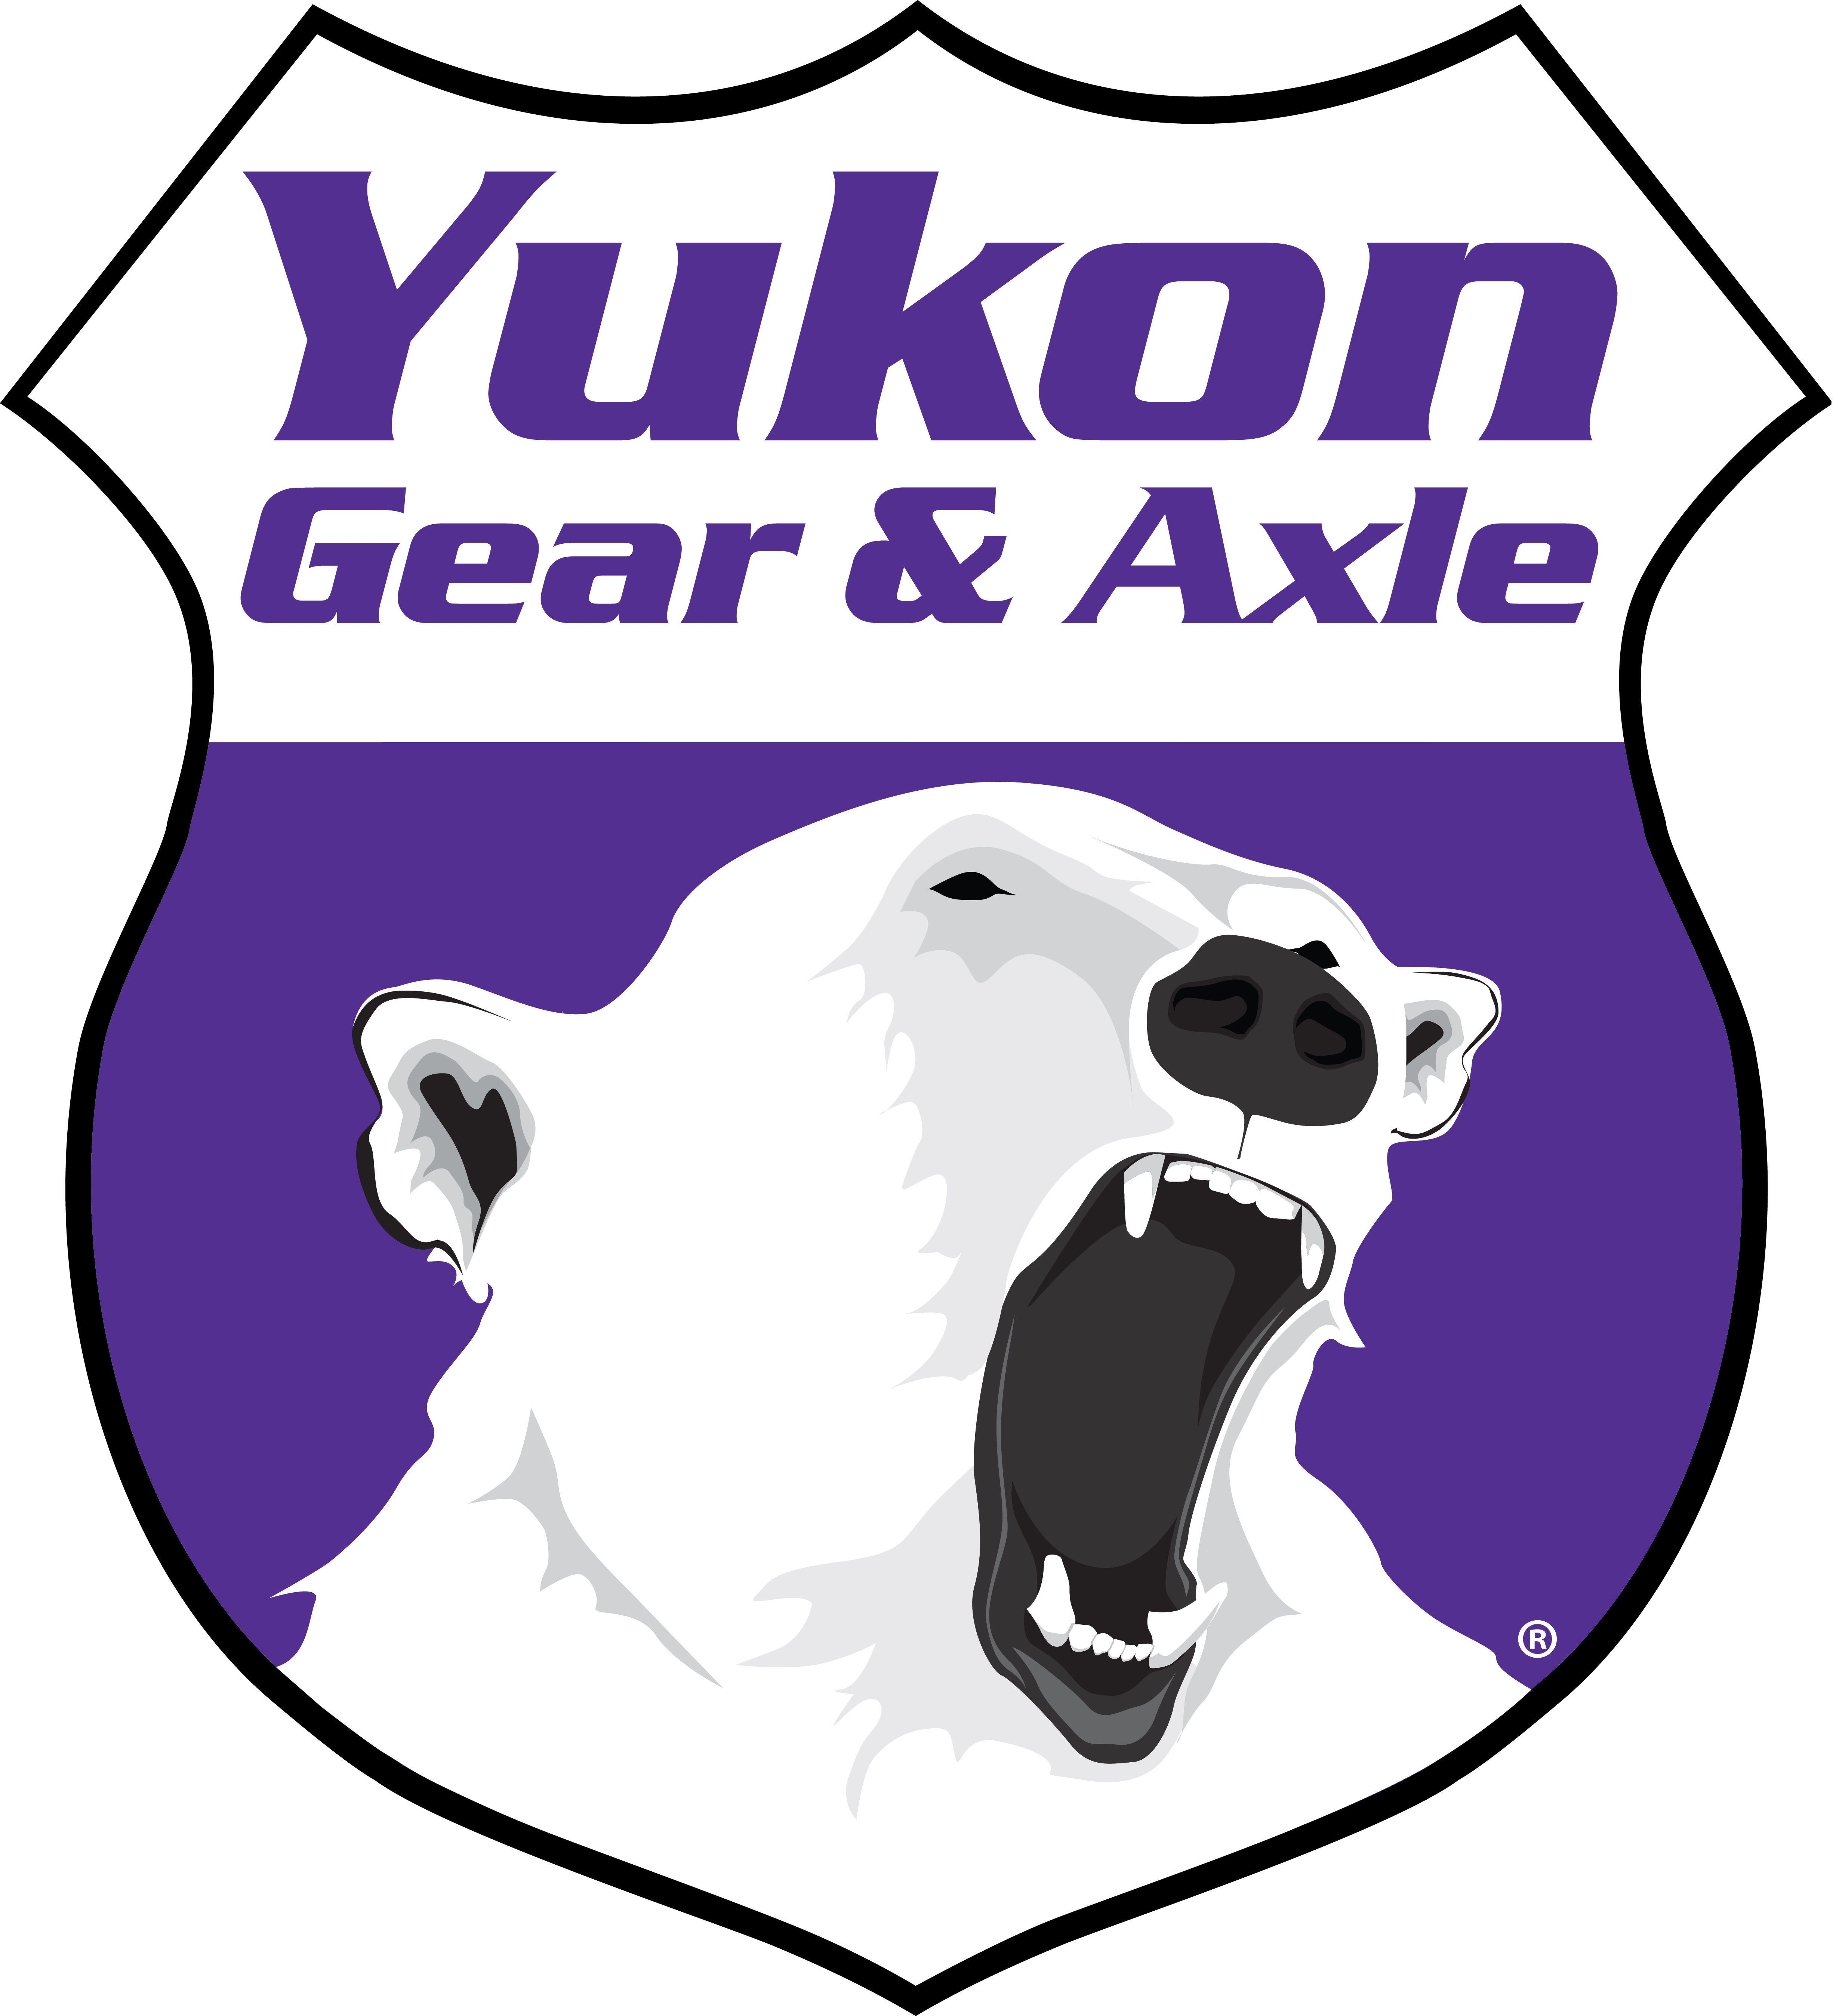 Yukon ring & pinion set, Dana 44 rear, JL Rubicon/Sport/Sahara, w/posi, 3.45 